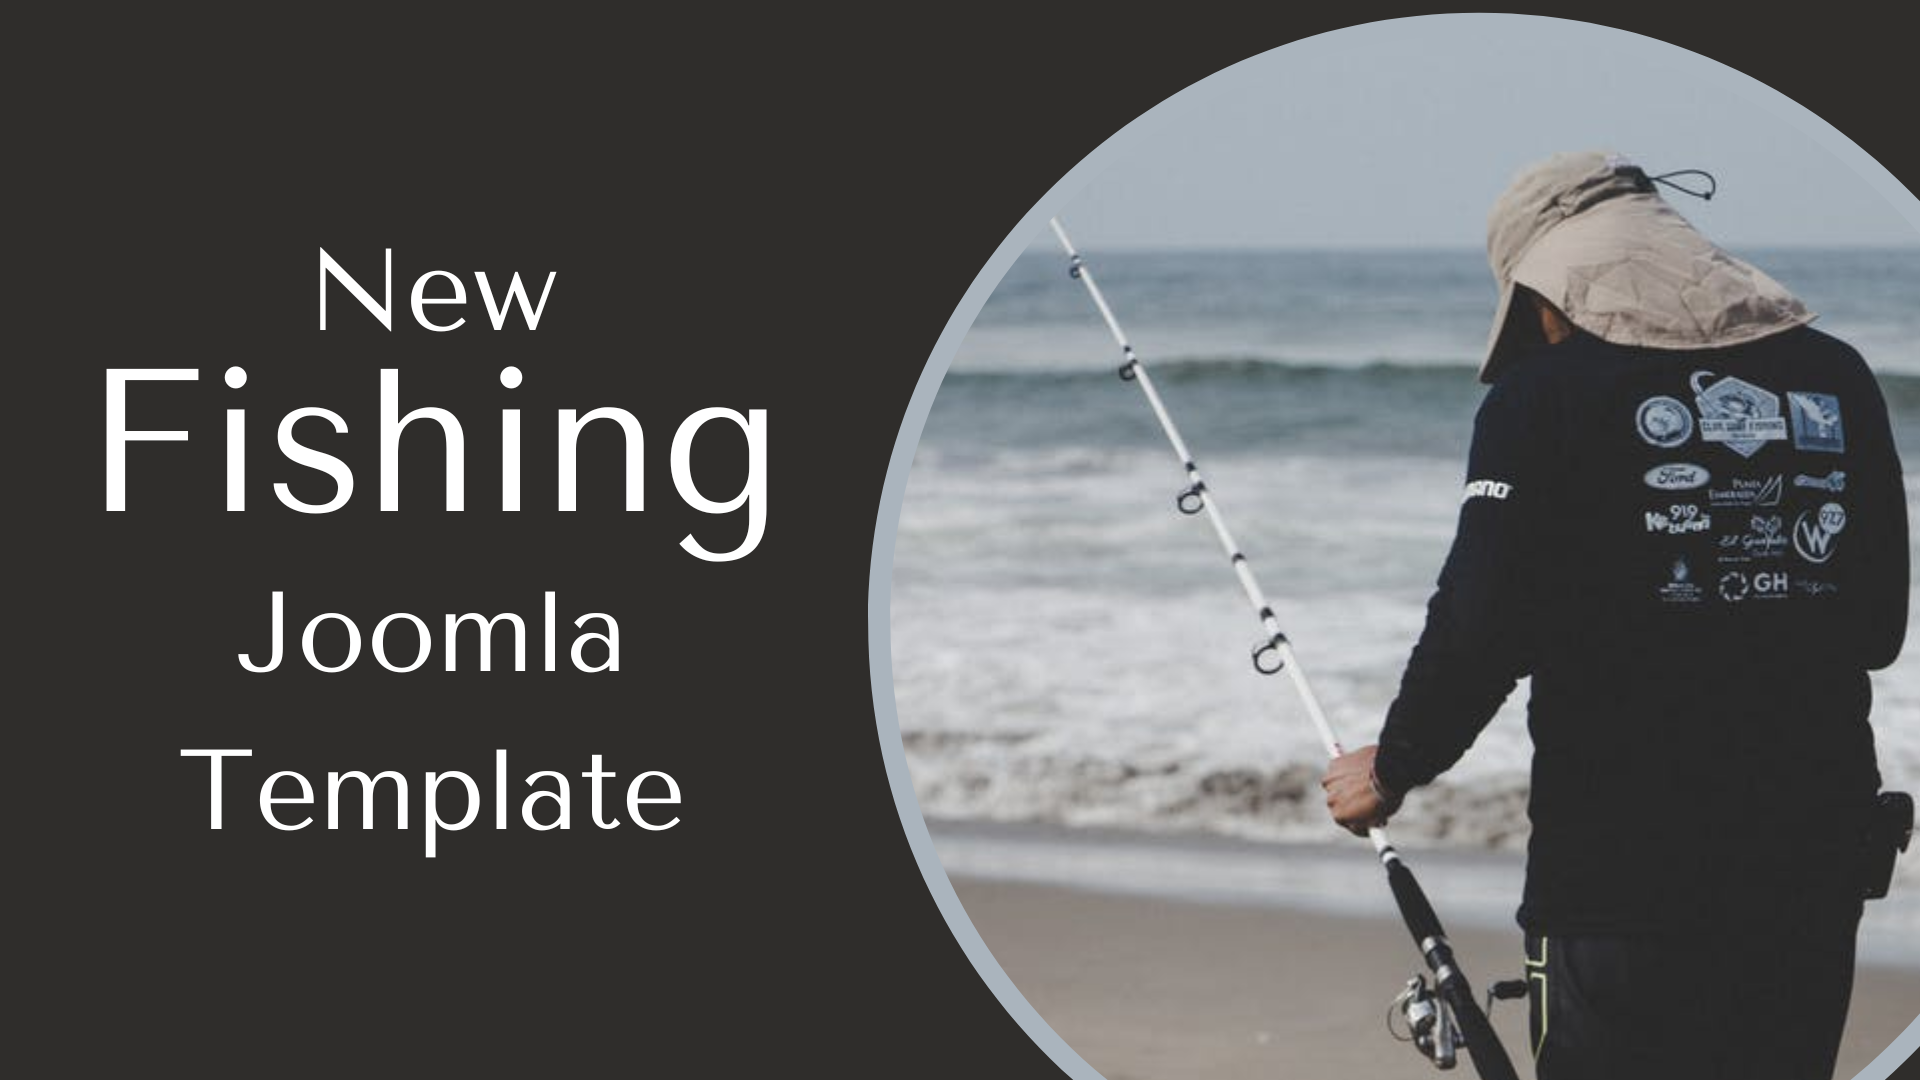 ordasoft Joomla News: Fishing Website Template